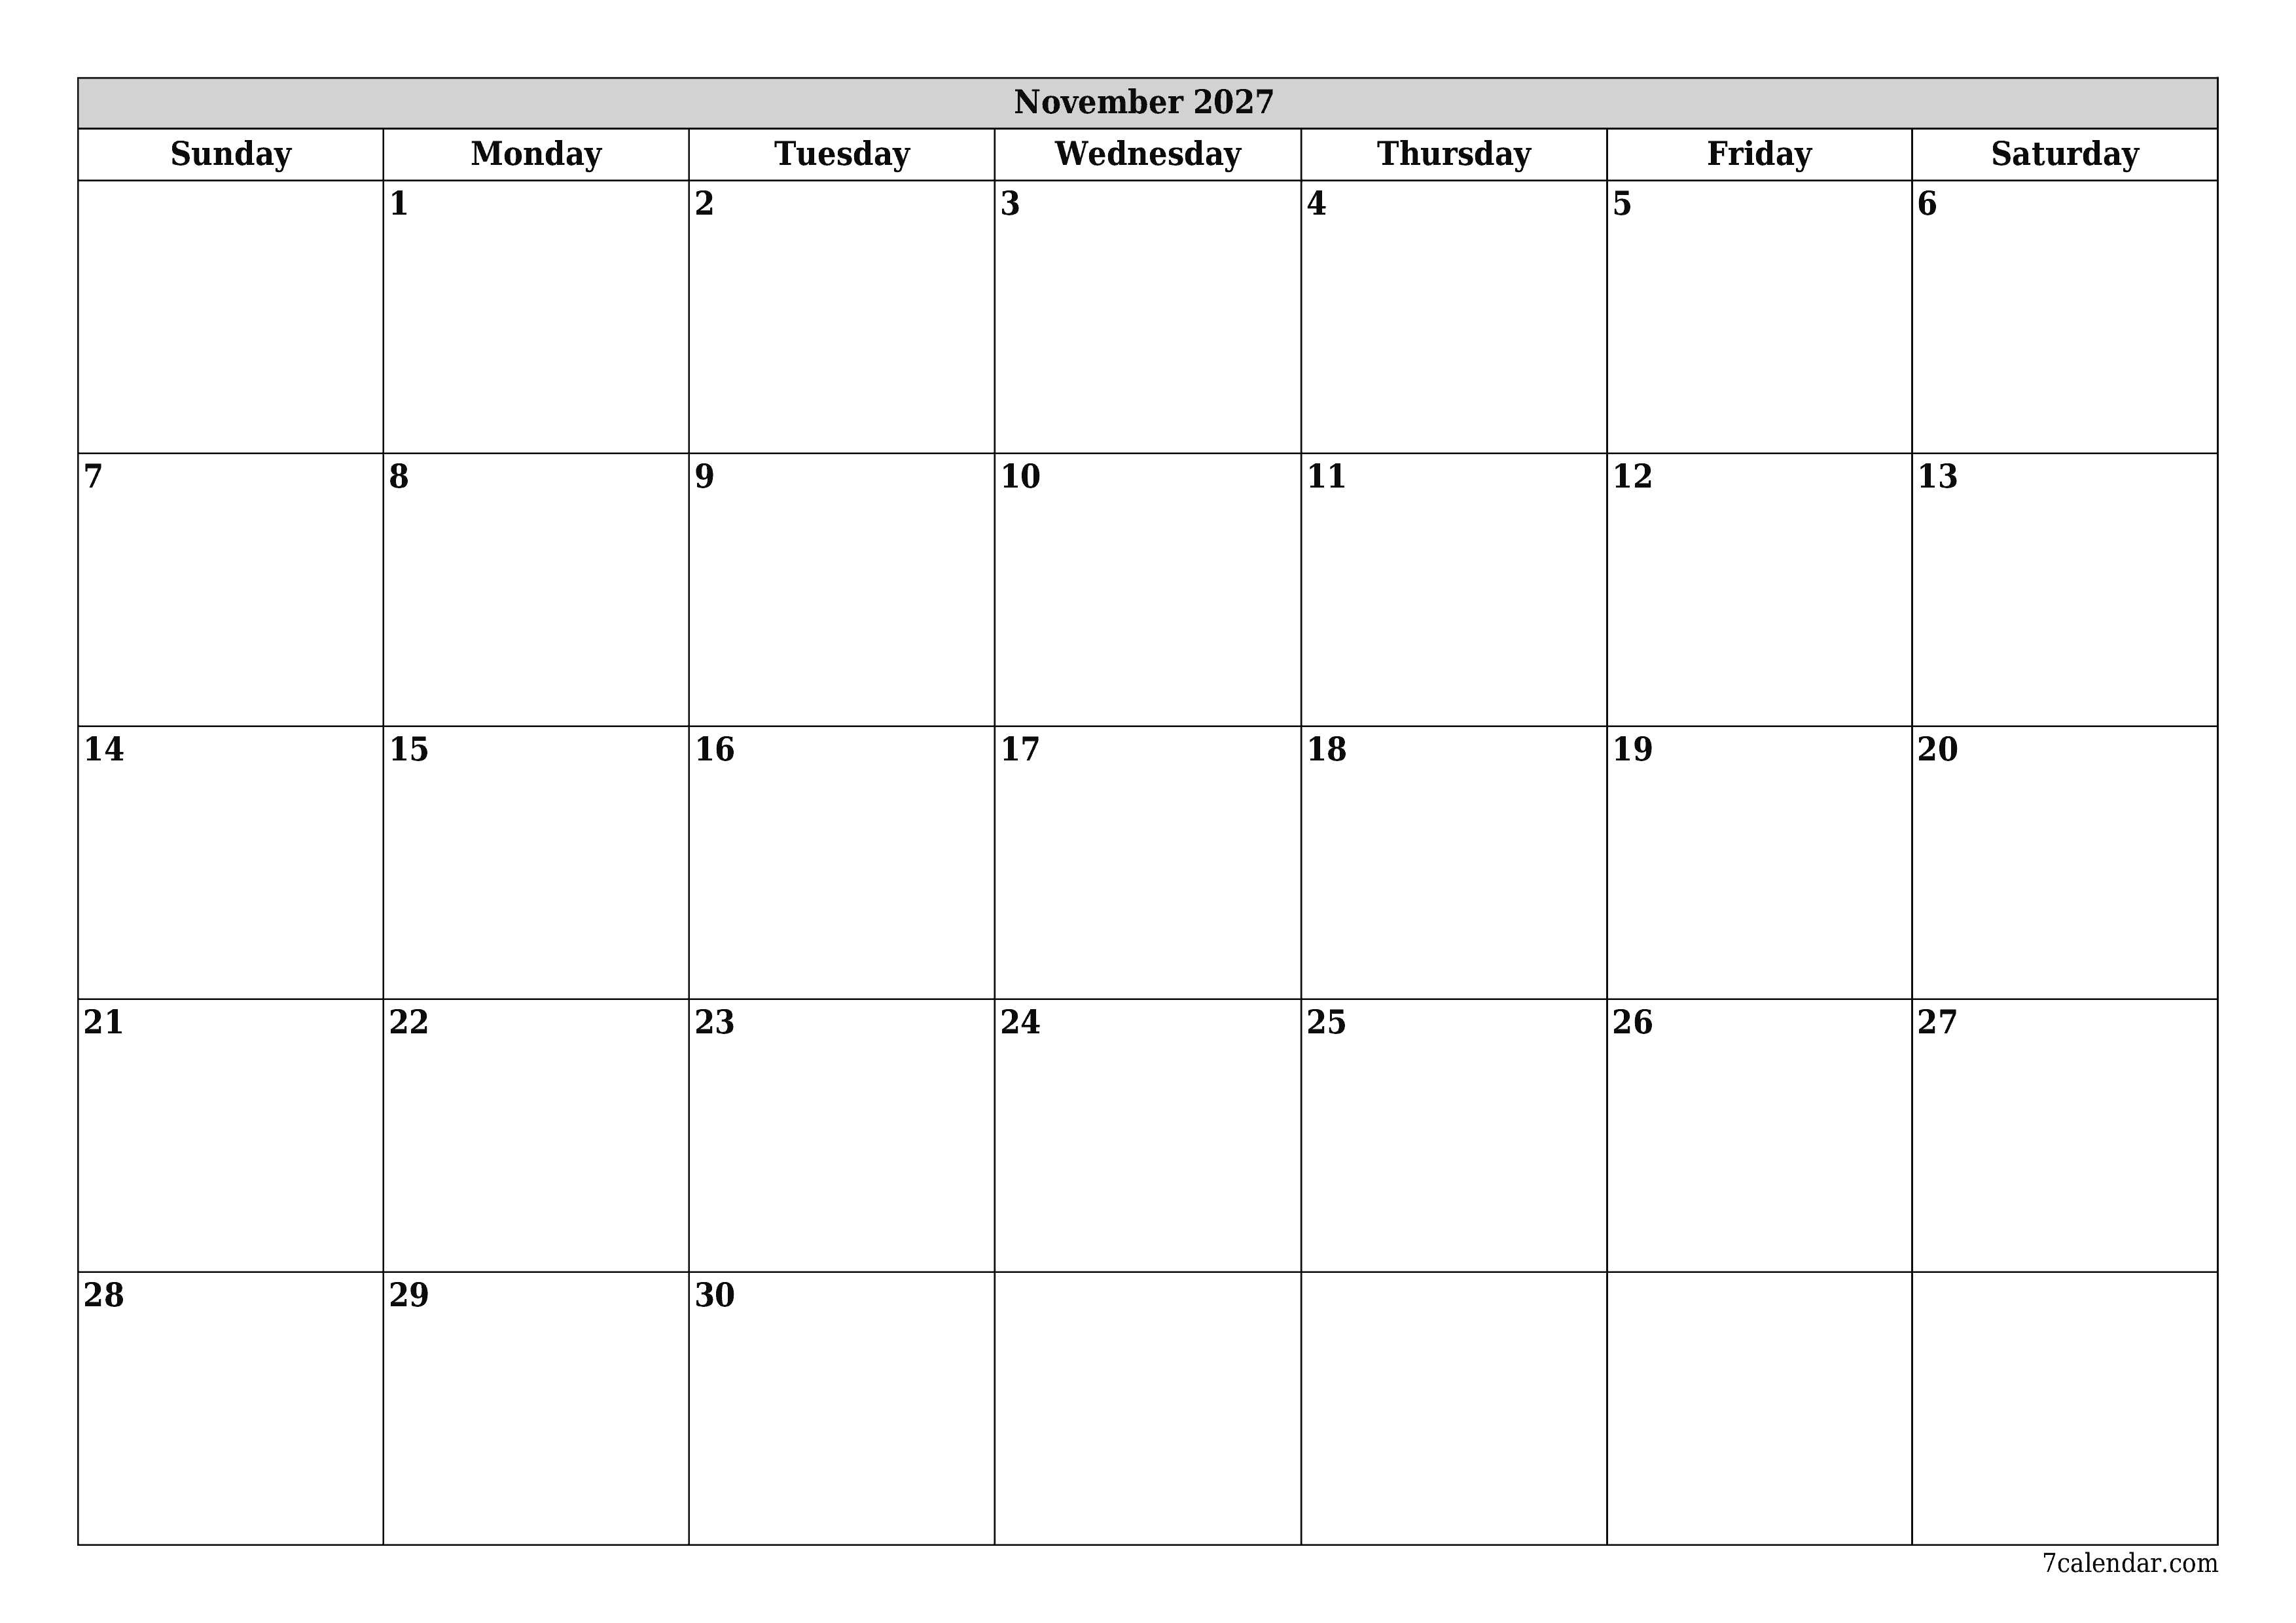 Blank calendar November 2027